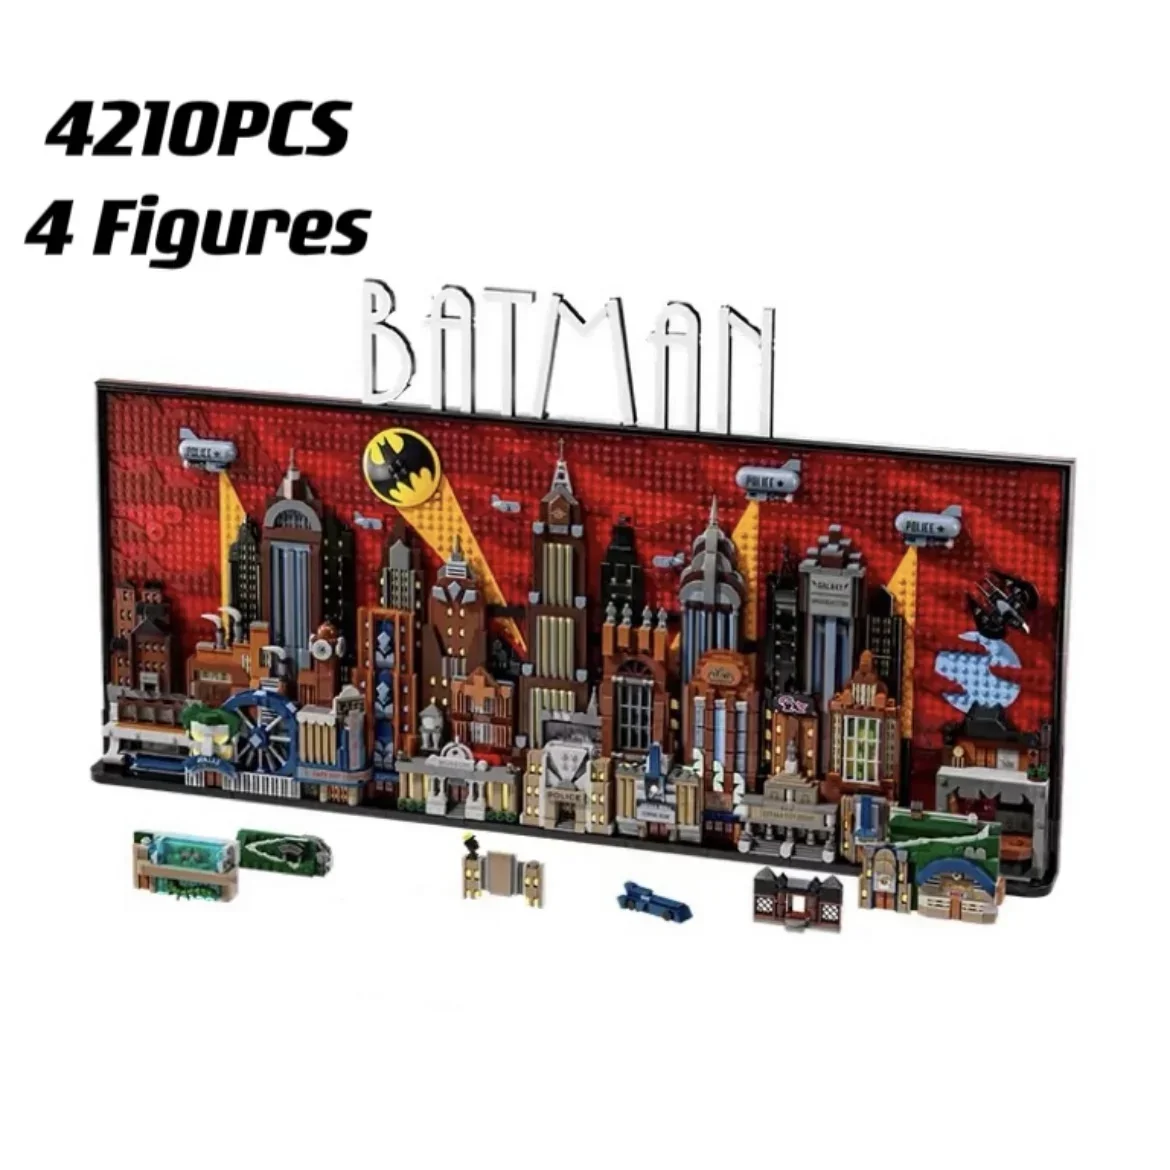 

76271 Gotham City The Animated Series Classic Model Building Blocks Bricks Toys For Kids Boys Adult Christmas Birthday Gifts